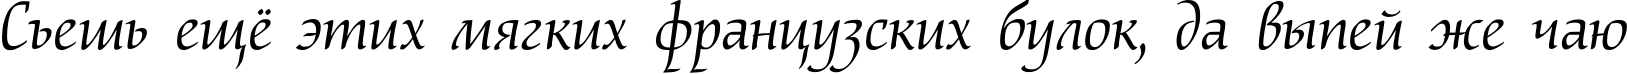 Пример написания шрифтом NataliScript текста на русском